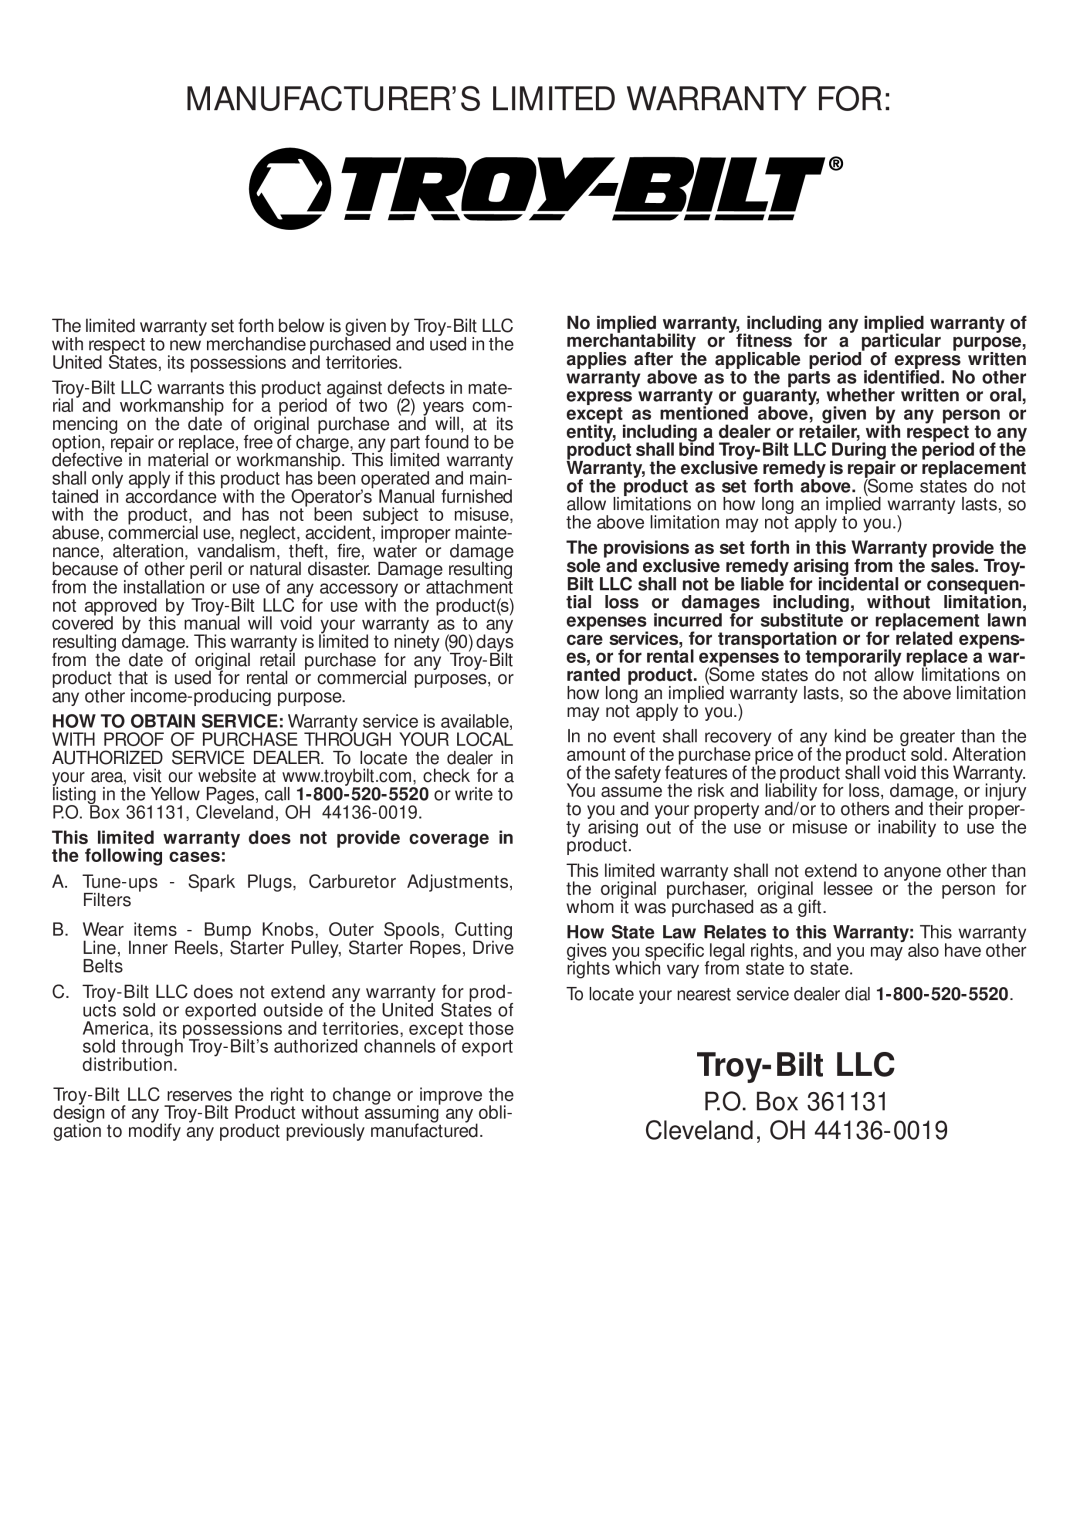 MTD TBPS manual Manufacturer’S Limited Warranty For, Troy-BiltLLC, P.O. Box Cleveland, OH 